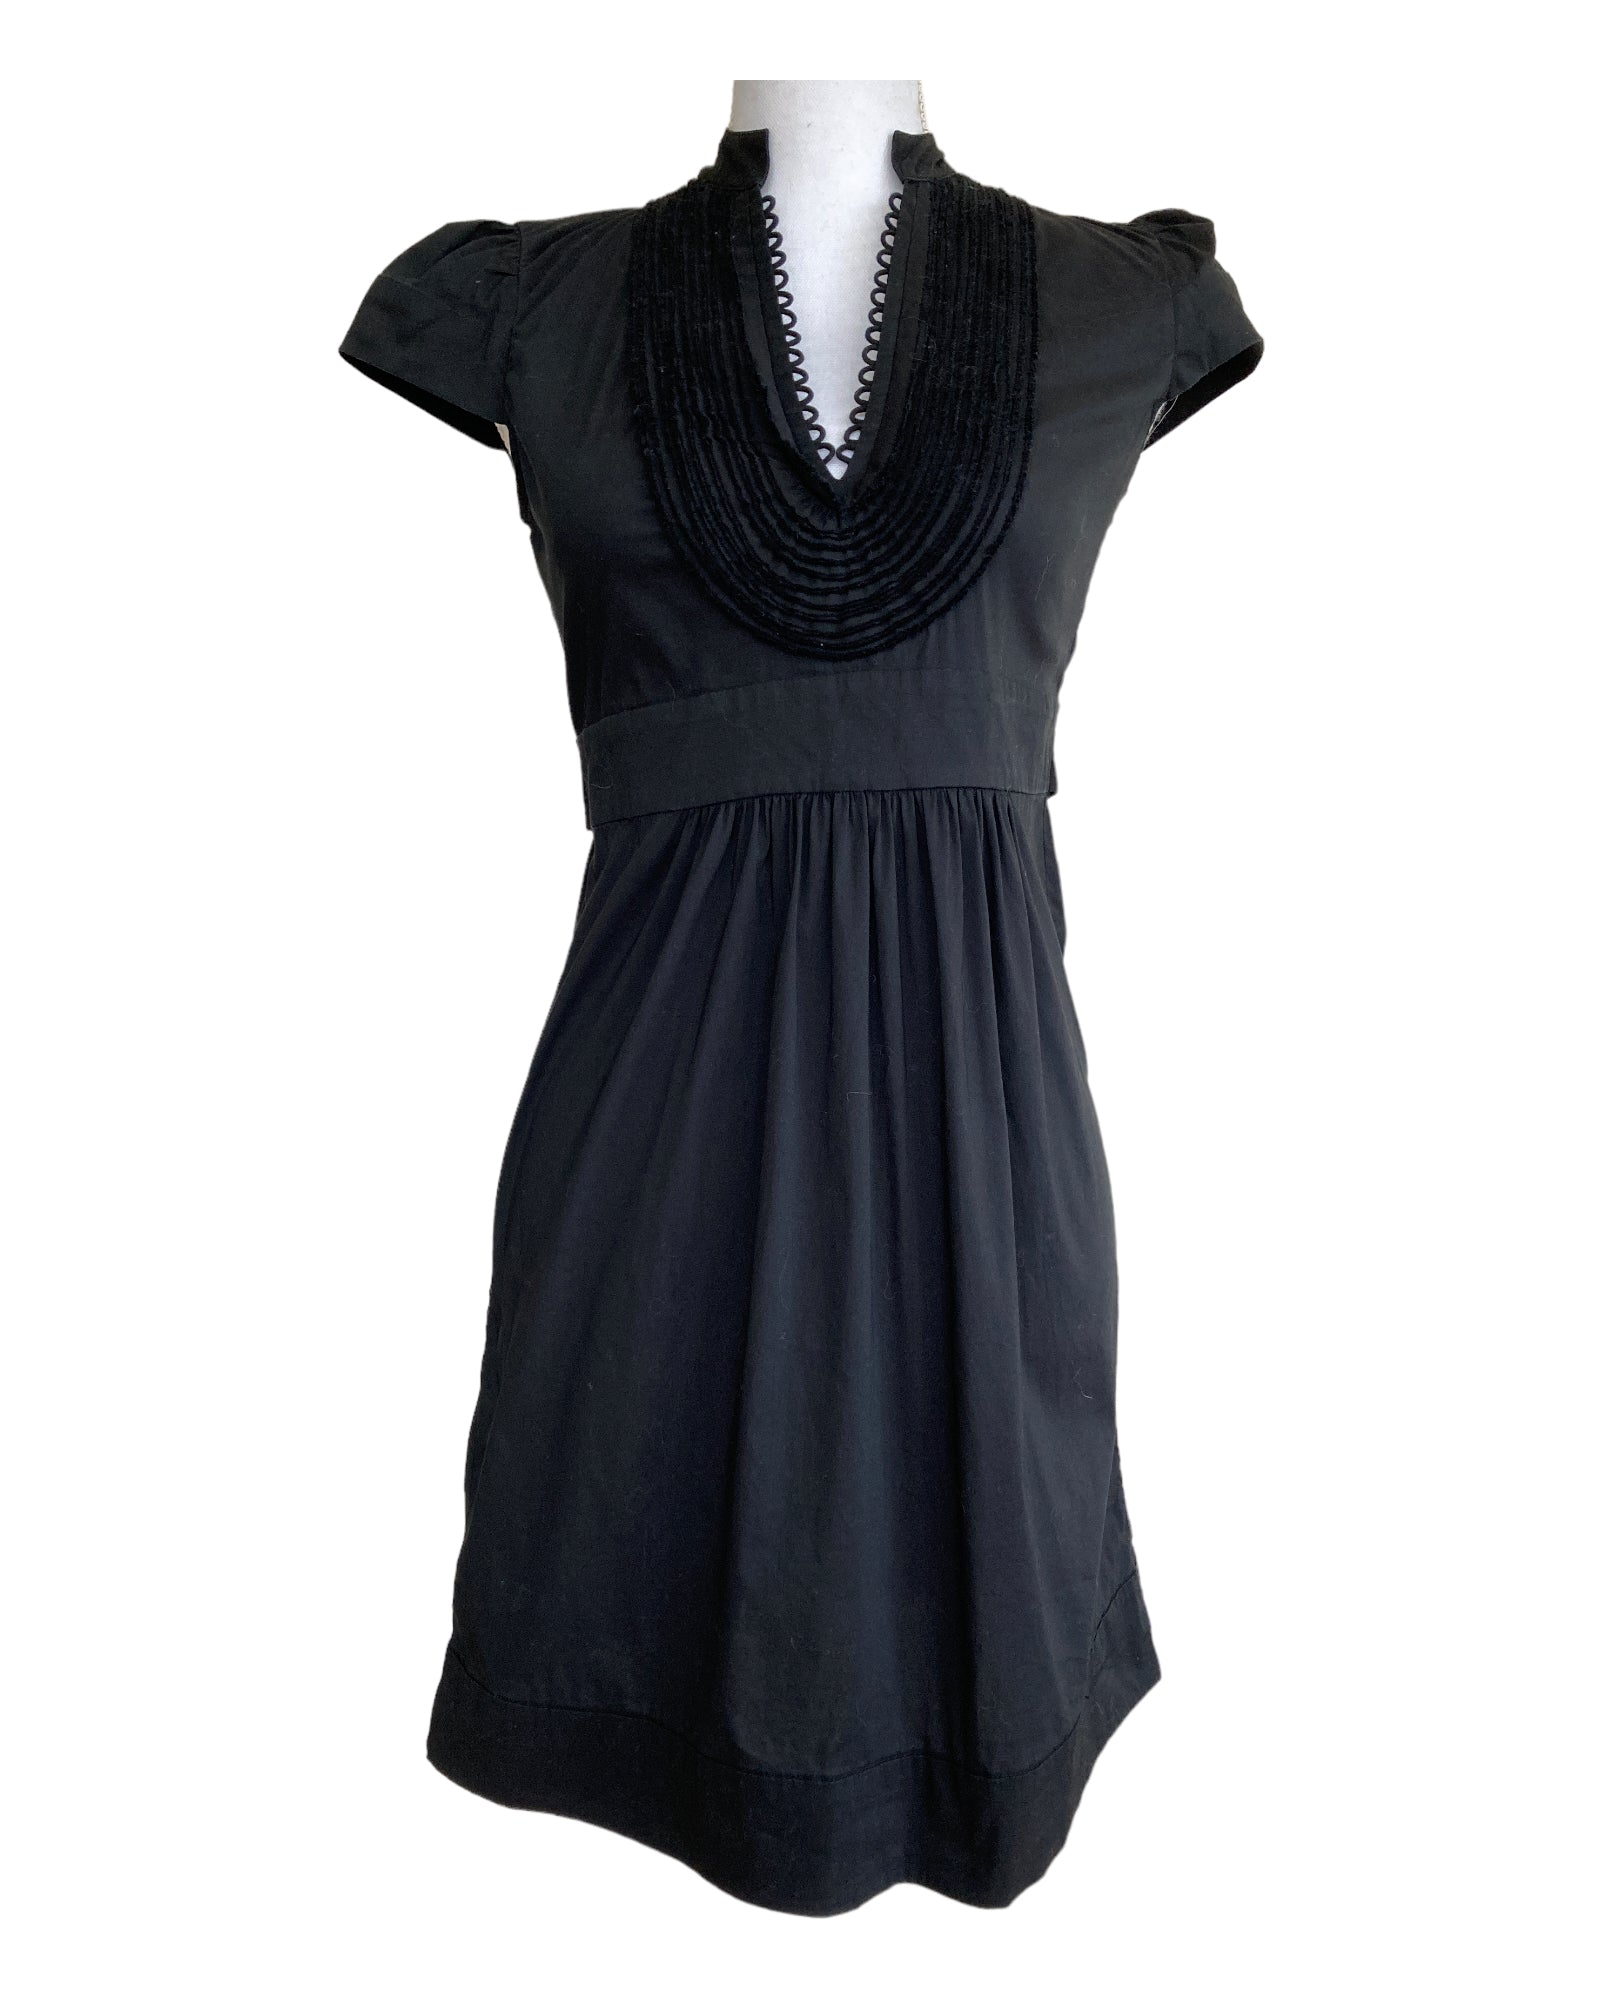 BCBG Maxazria Black Dress, XS